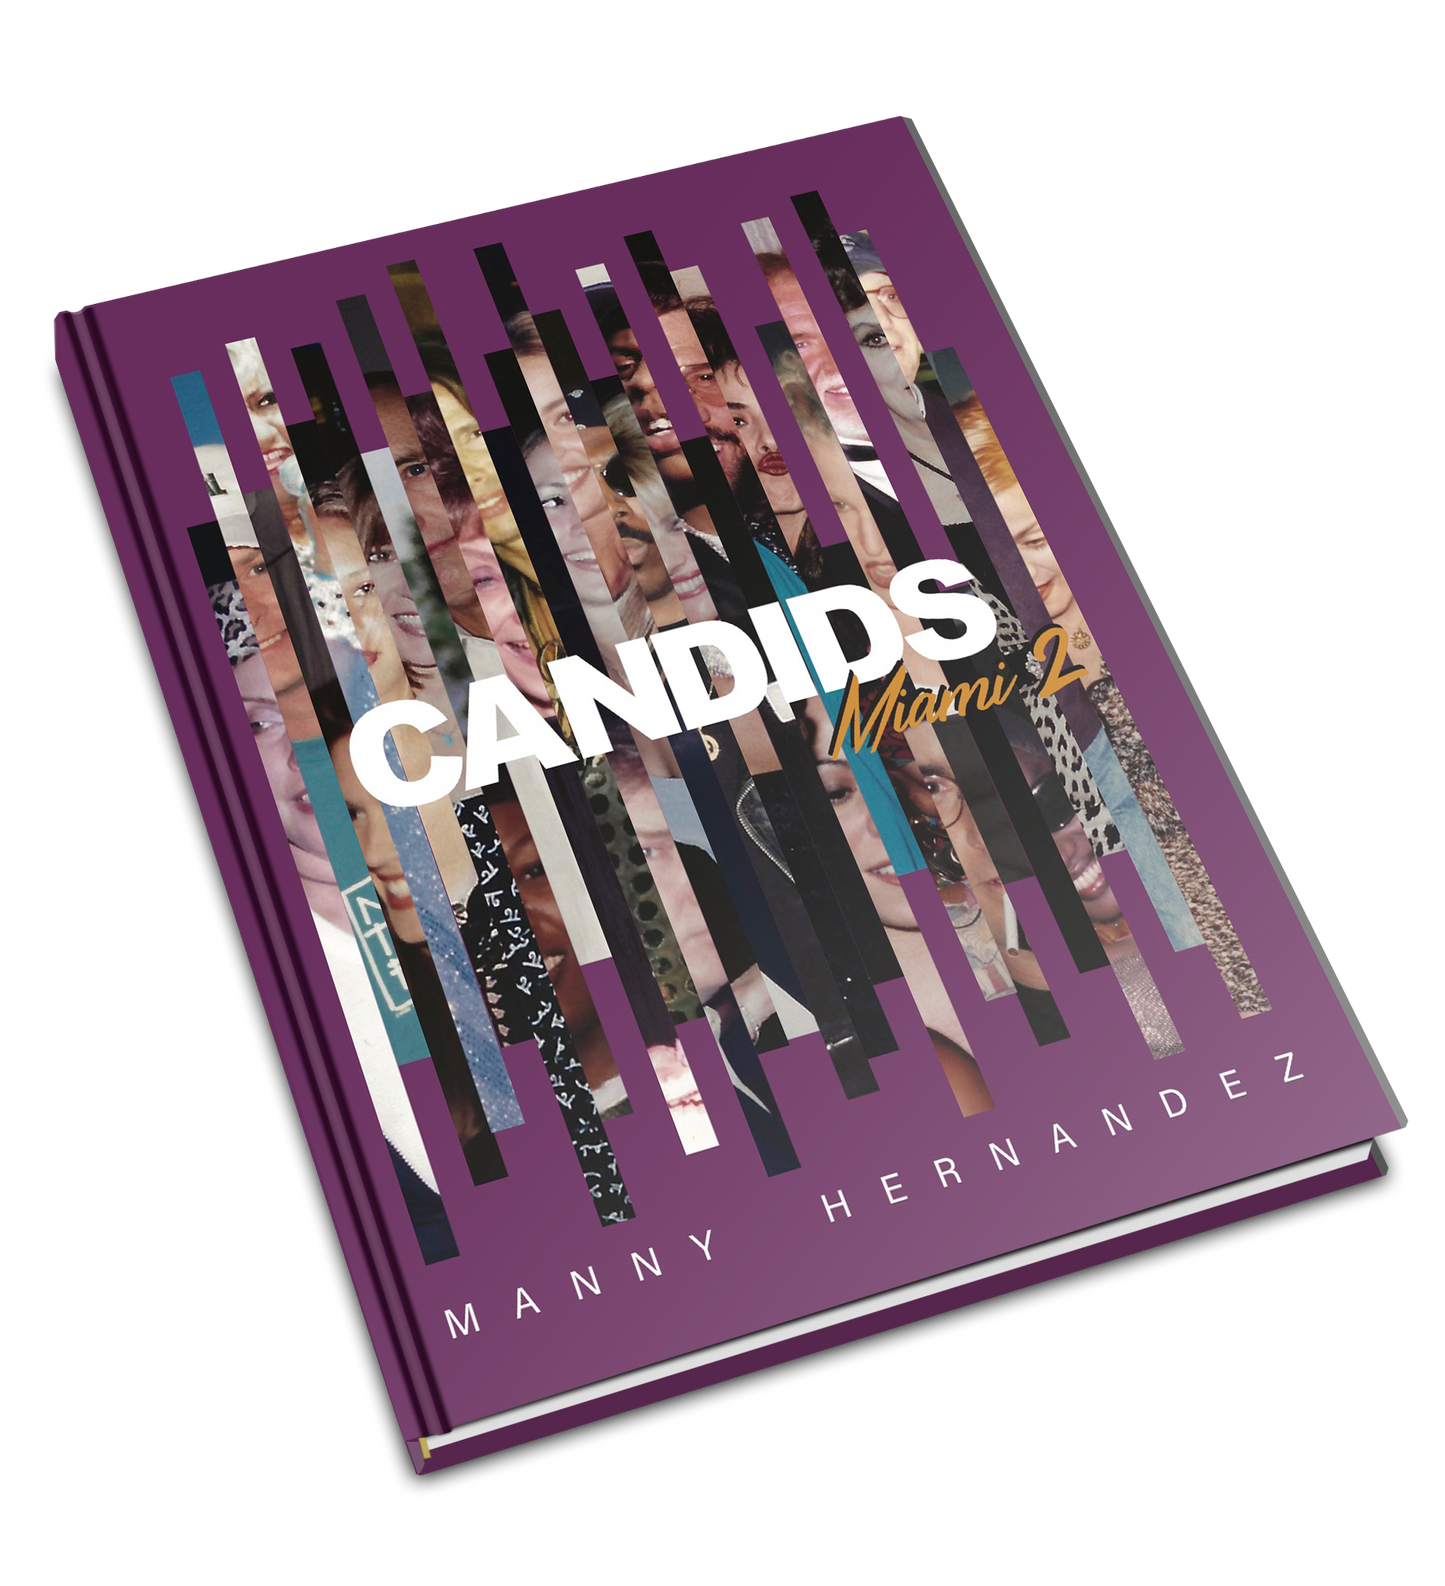 CANDIDS 2 by Manny Hernandez